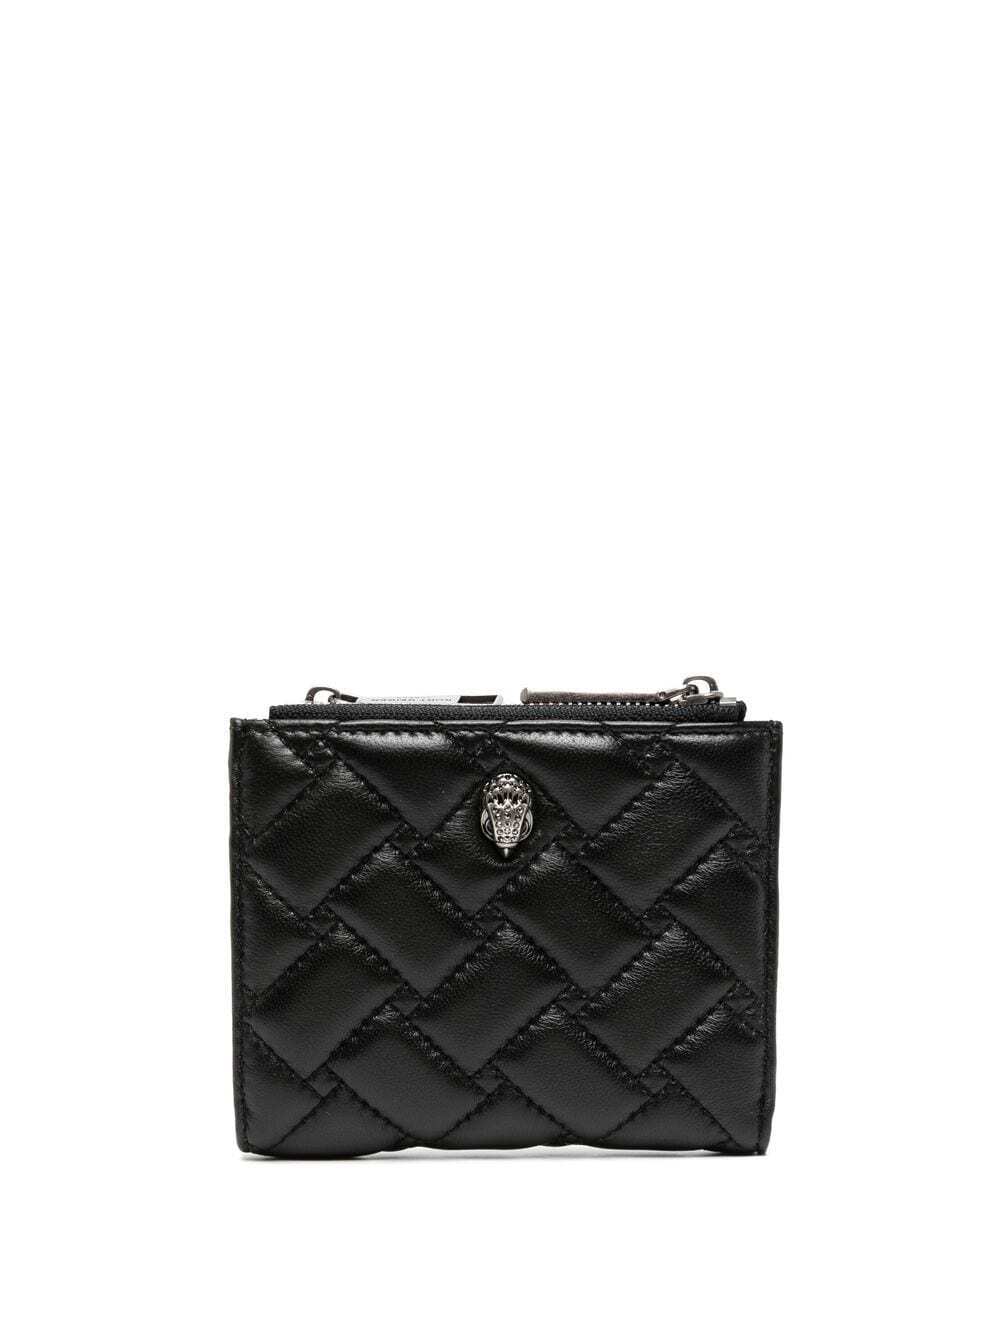 Kurt Geiger London quilted mini purse - Black